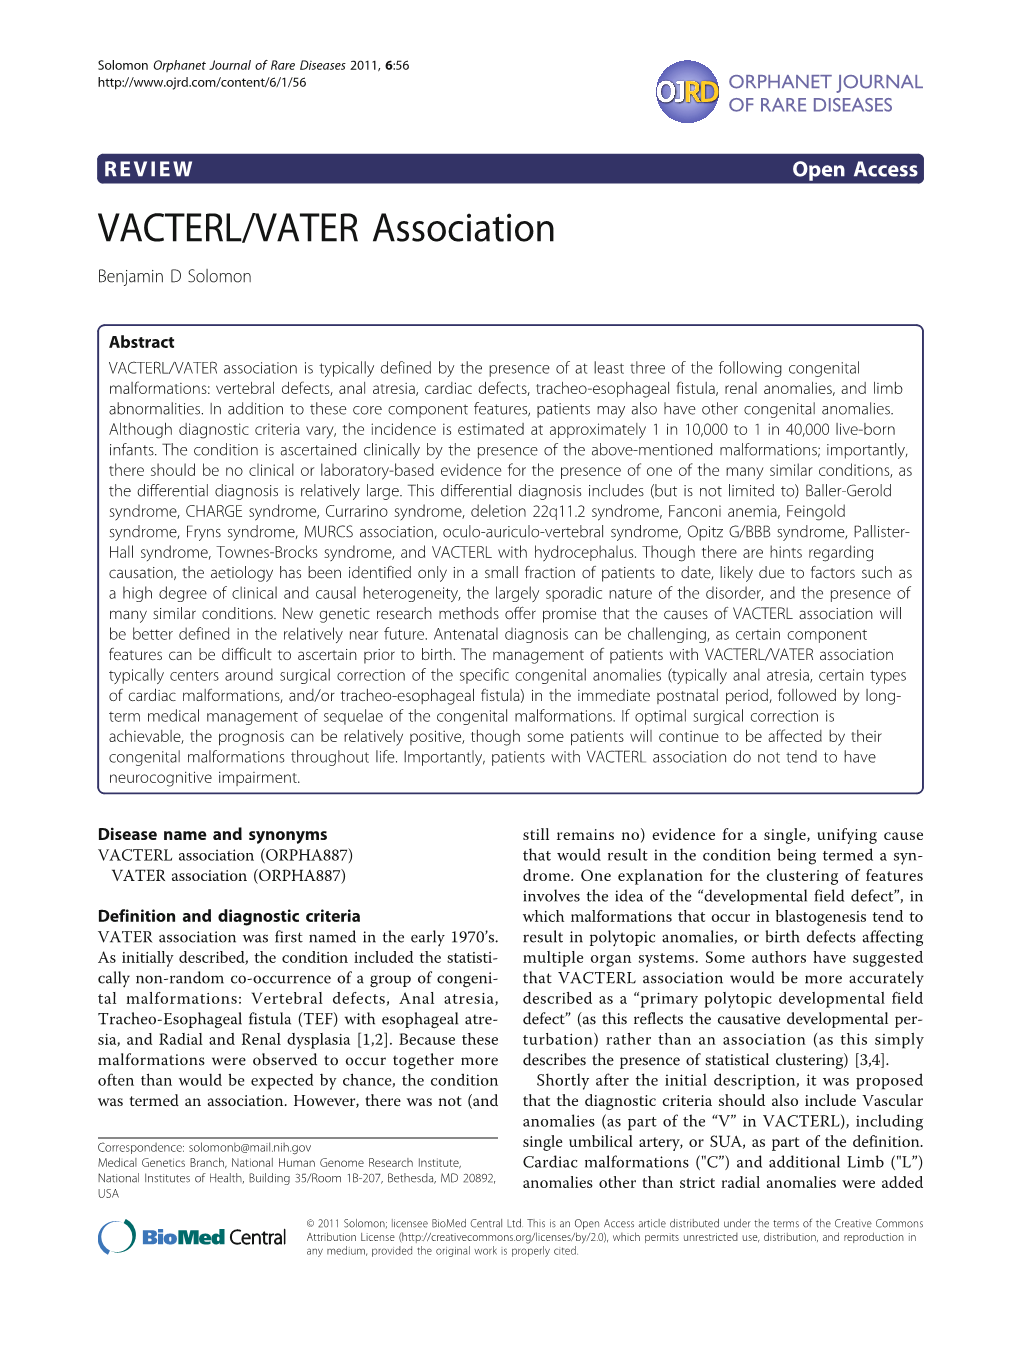 VACTERL/VATER Association Benjamin D Solomon